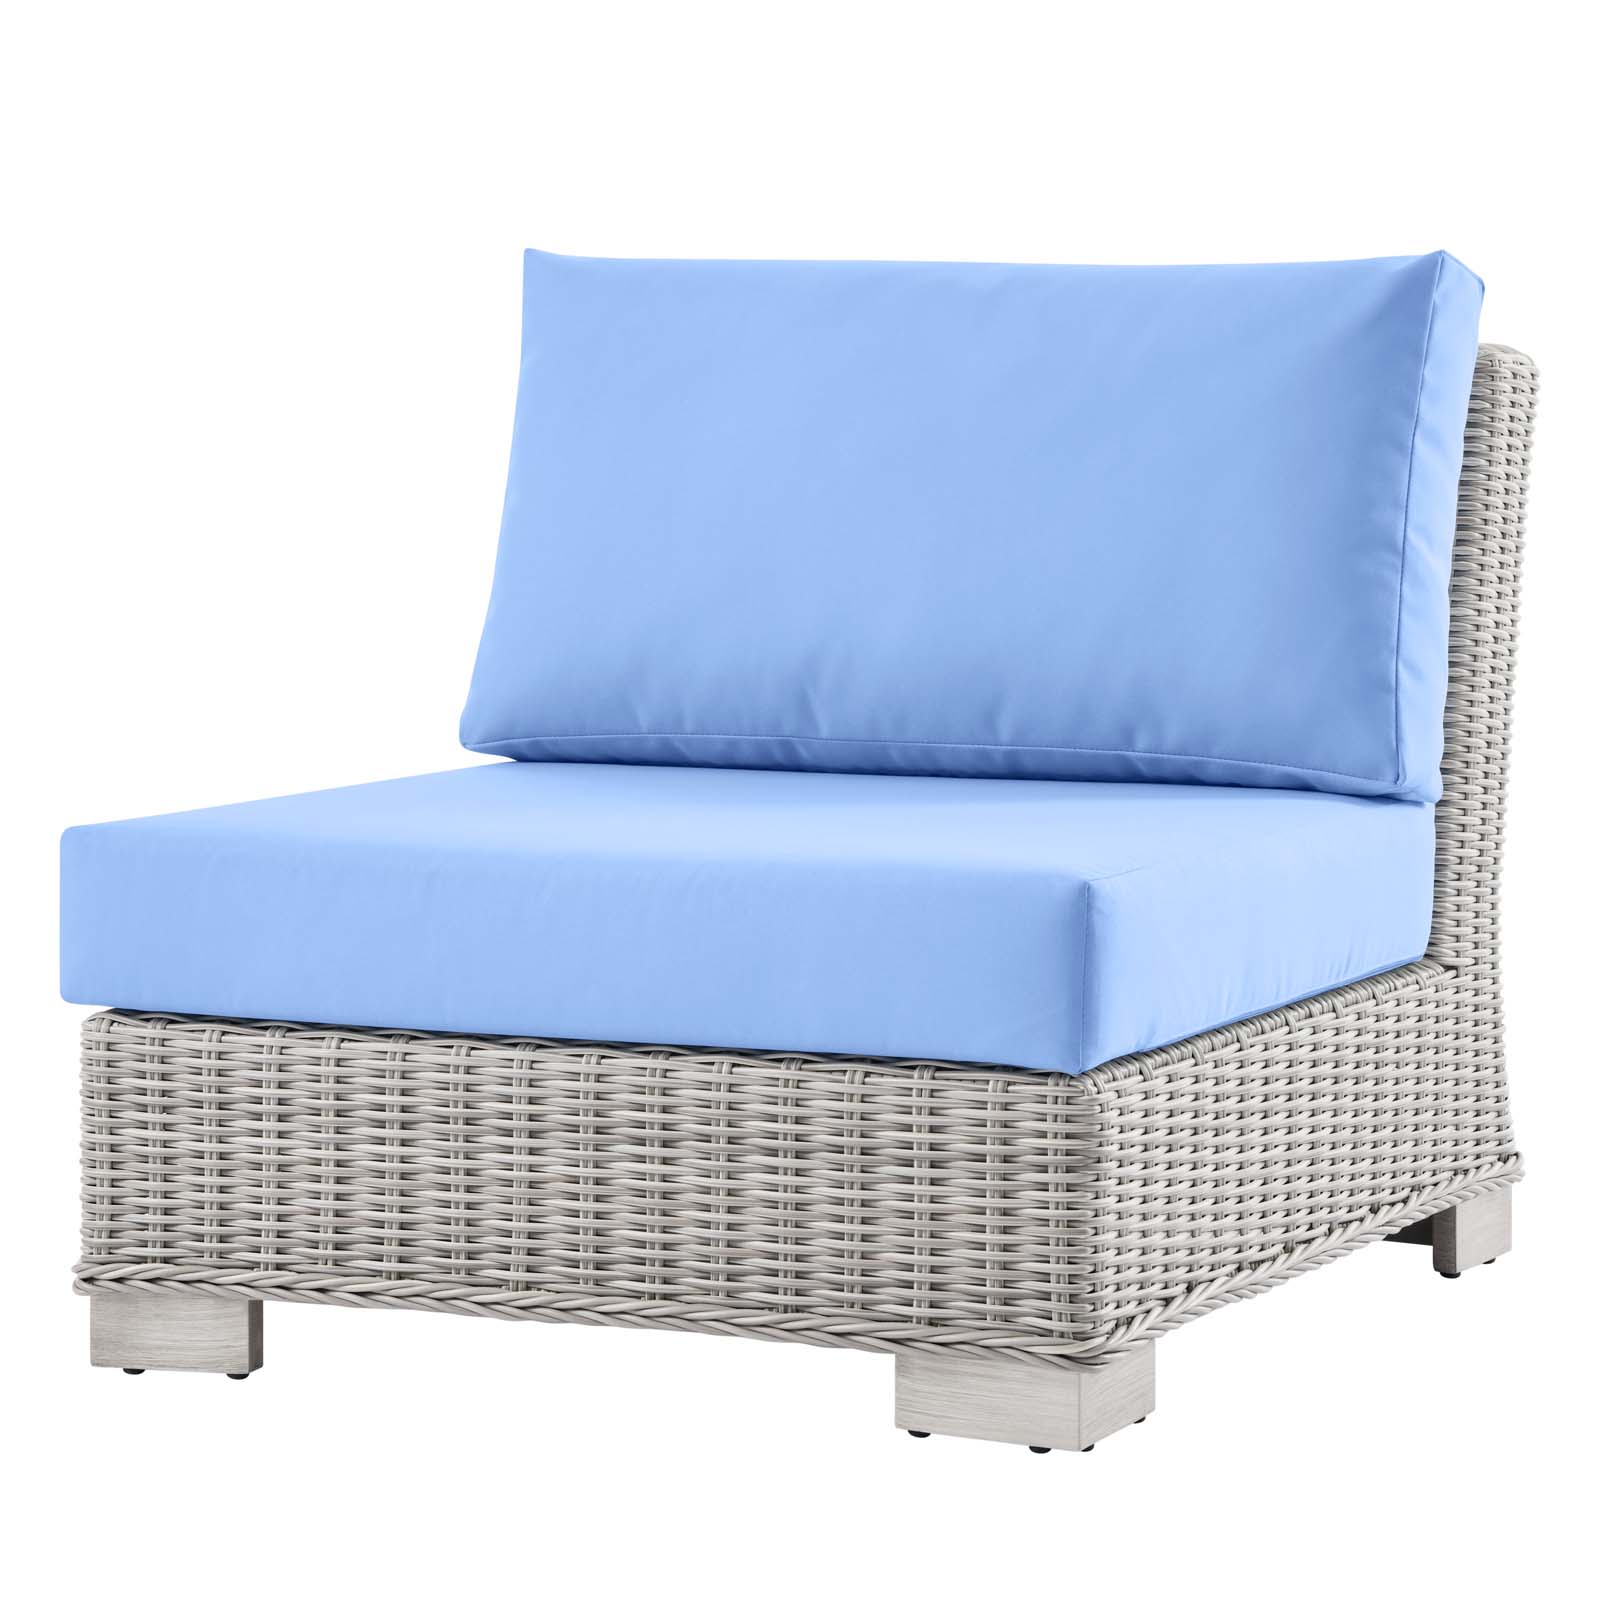 Lounge Sectional Sofa Chair Set, Rattan, Wicker, Light Grey Gray Light Blue, Modern Contemporary Urban Design, Outdoor Patio Balcony Cafe Bistro Garden Furniture Hotel Hospitality - image 3 of 10